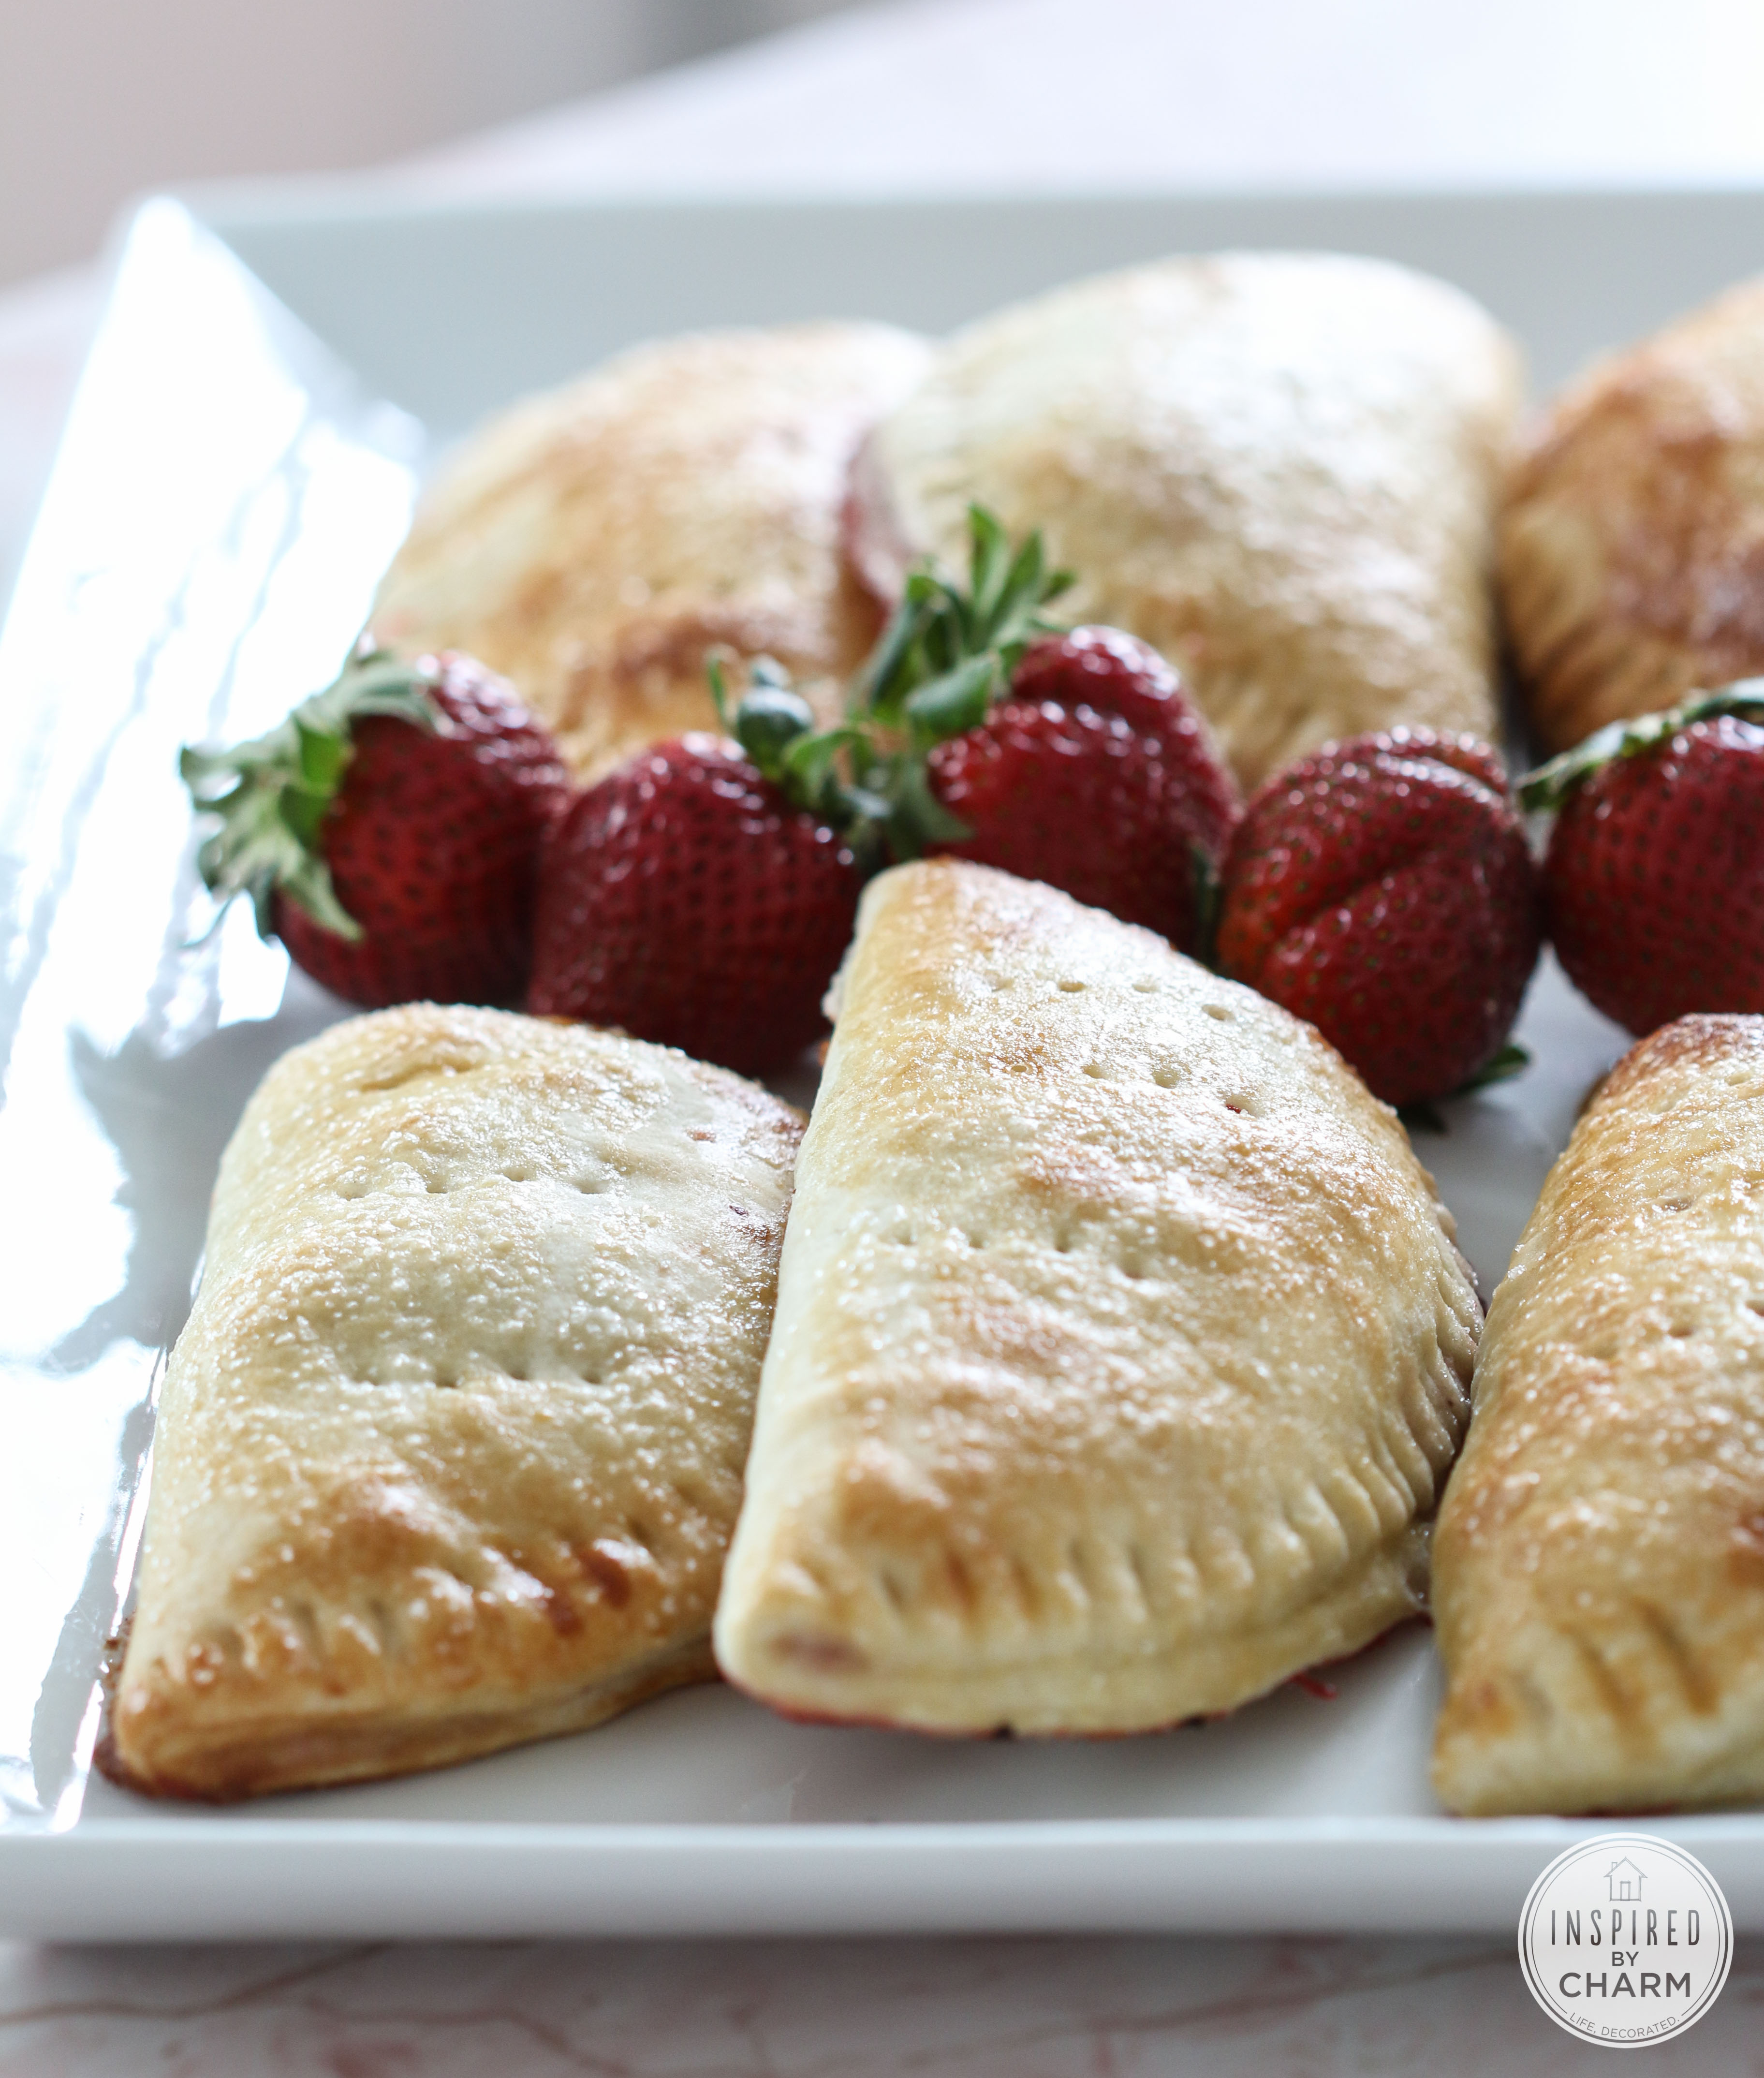 Strawberry Hand Pies - Summer Dessert Recipe Idea #strawberry #pie #handpie #recipe #dessert